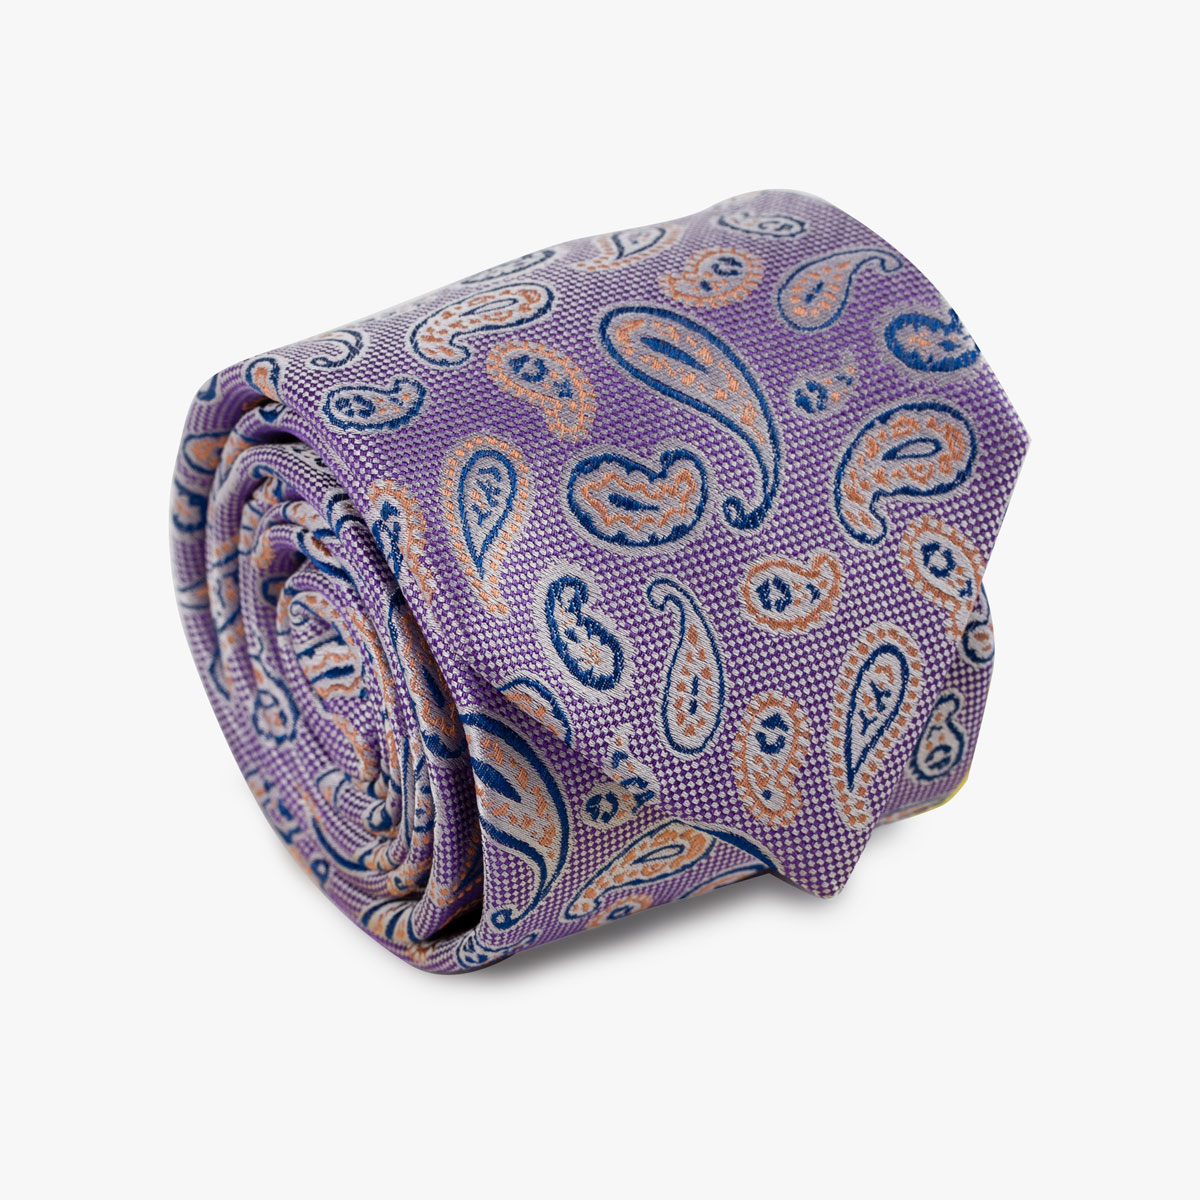 Aufgerollte Krawatte mit Paisley-Muster in lila